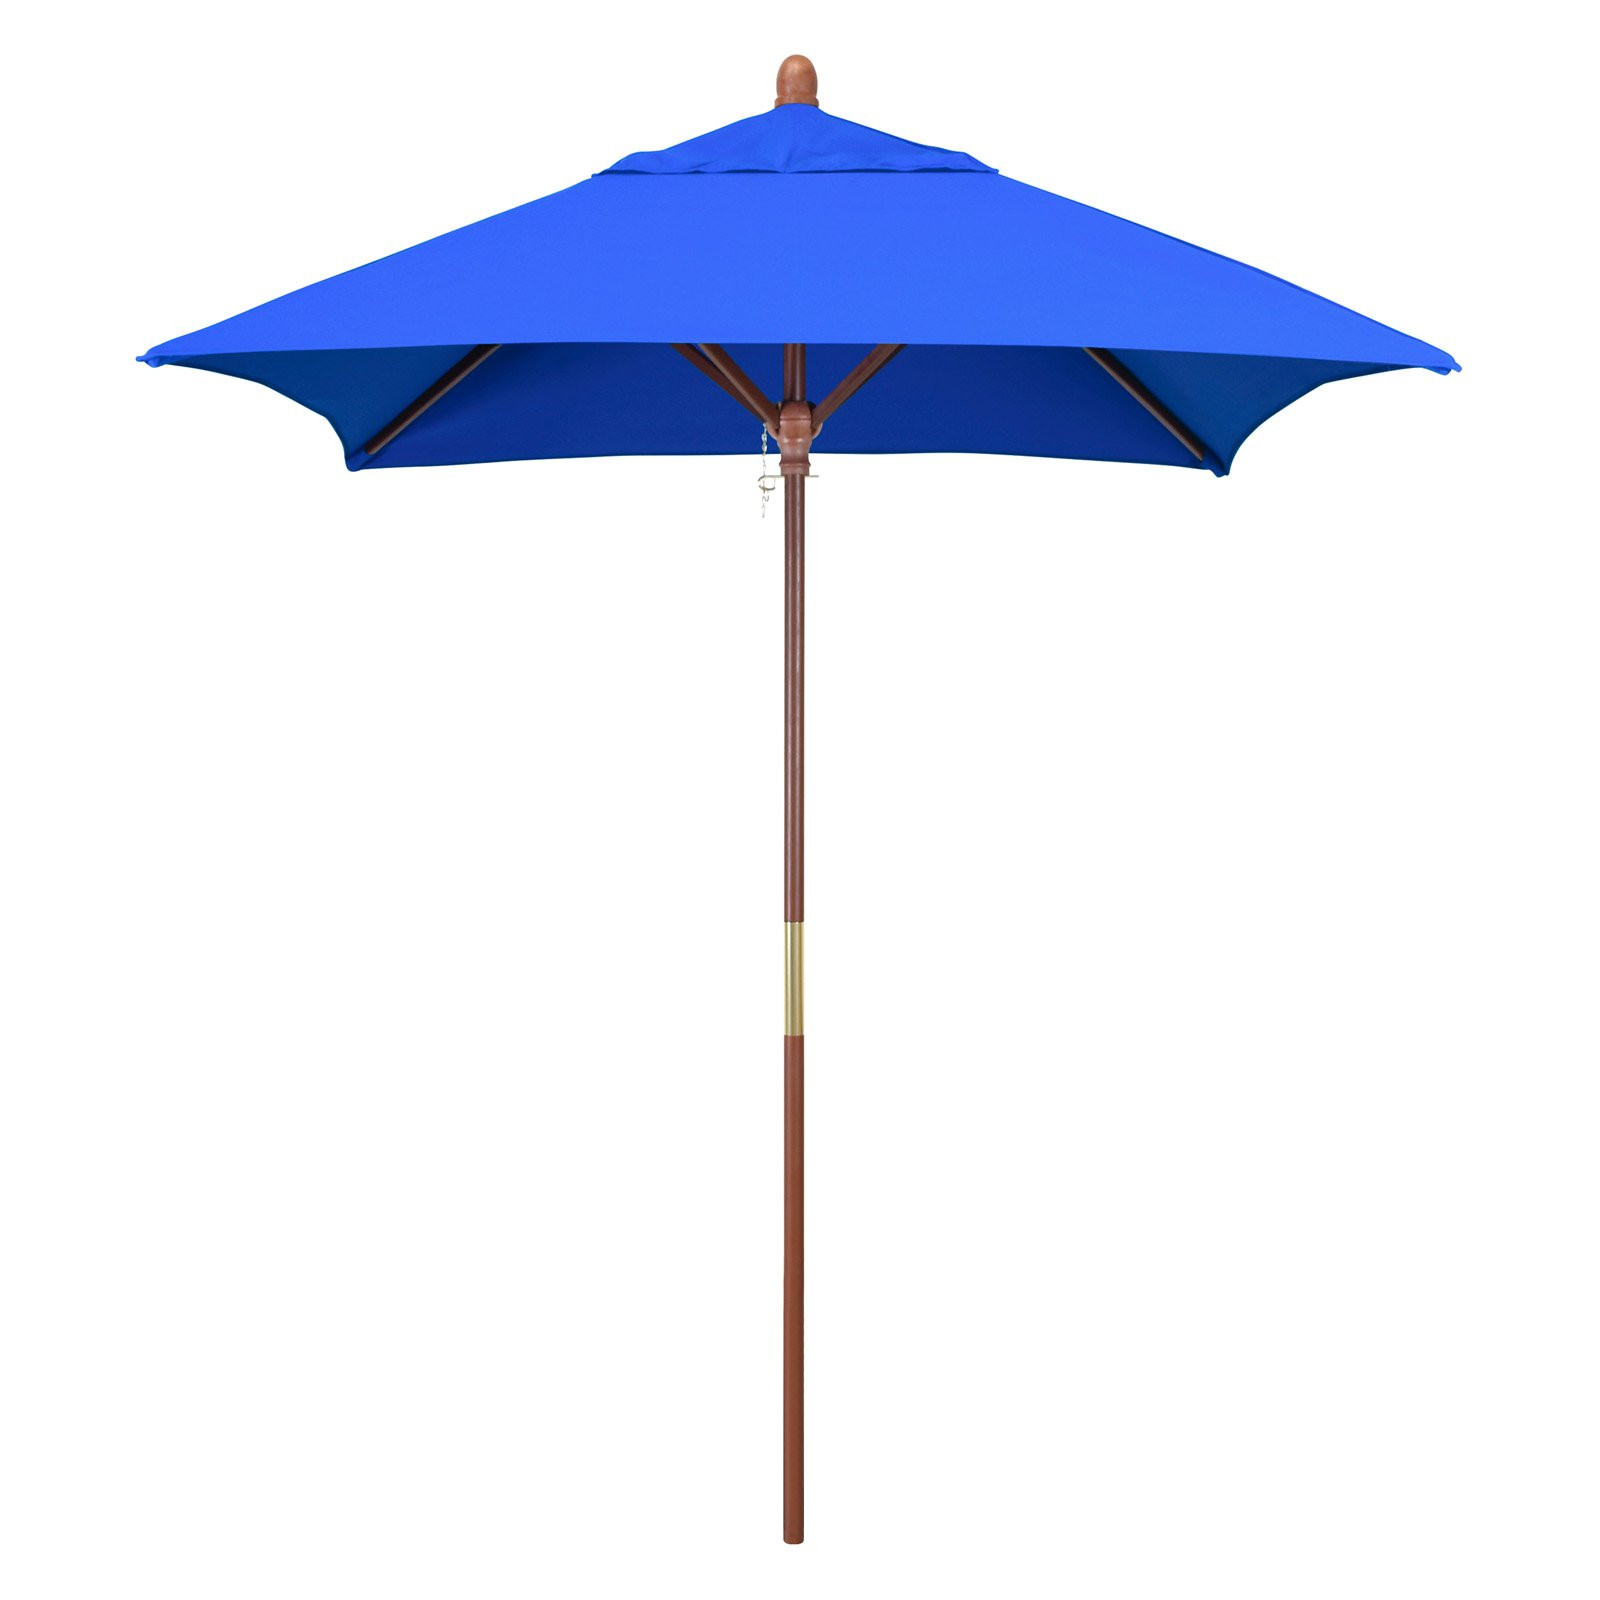 Best ideas about Square Patio Umbrella
. Save or Pin California Umbrella 6 ft Square Marenti Wood Sunbrella Now.